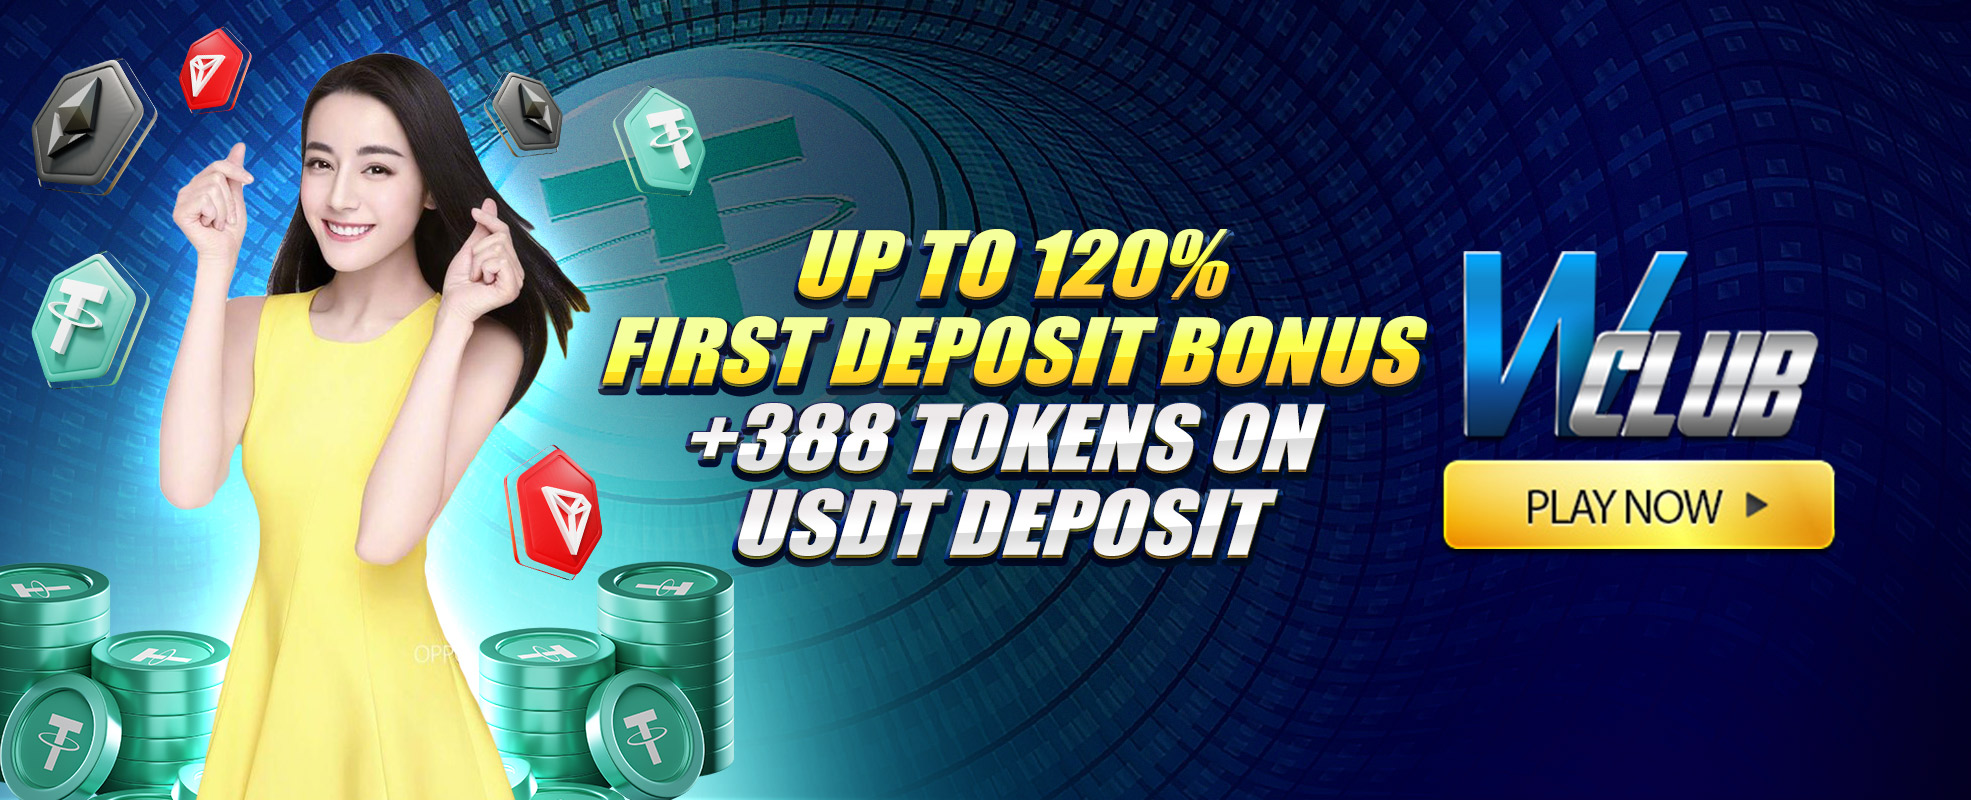 Up to 120% First Deposit Bonus +388 Tokens On USDT Deposit